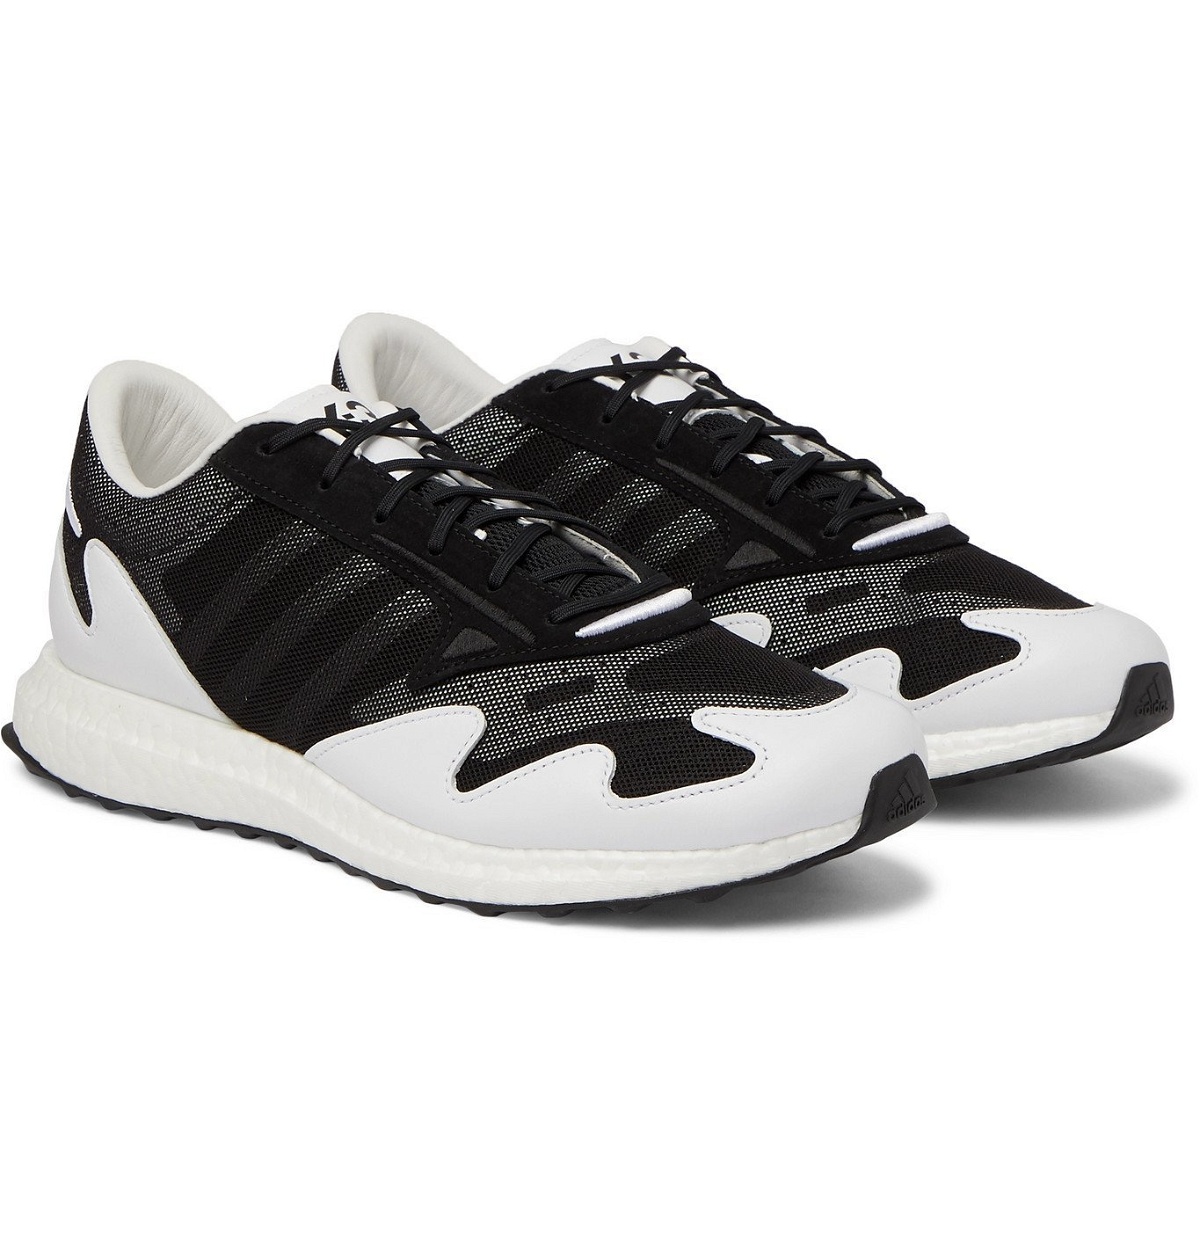 Y-3 - Rhisu Run Leather and Suede-Trimmed Mesh Sneakers - Black Y-3